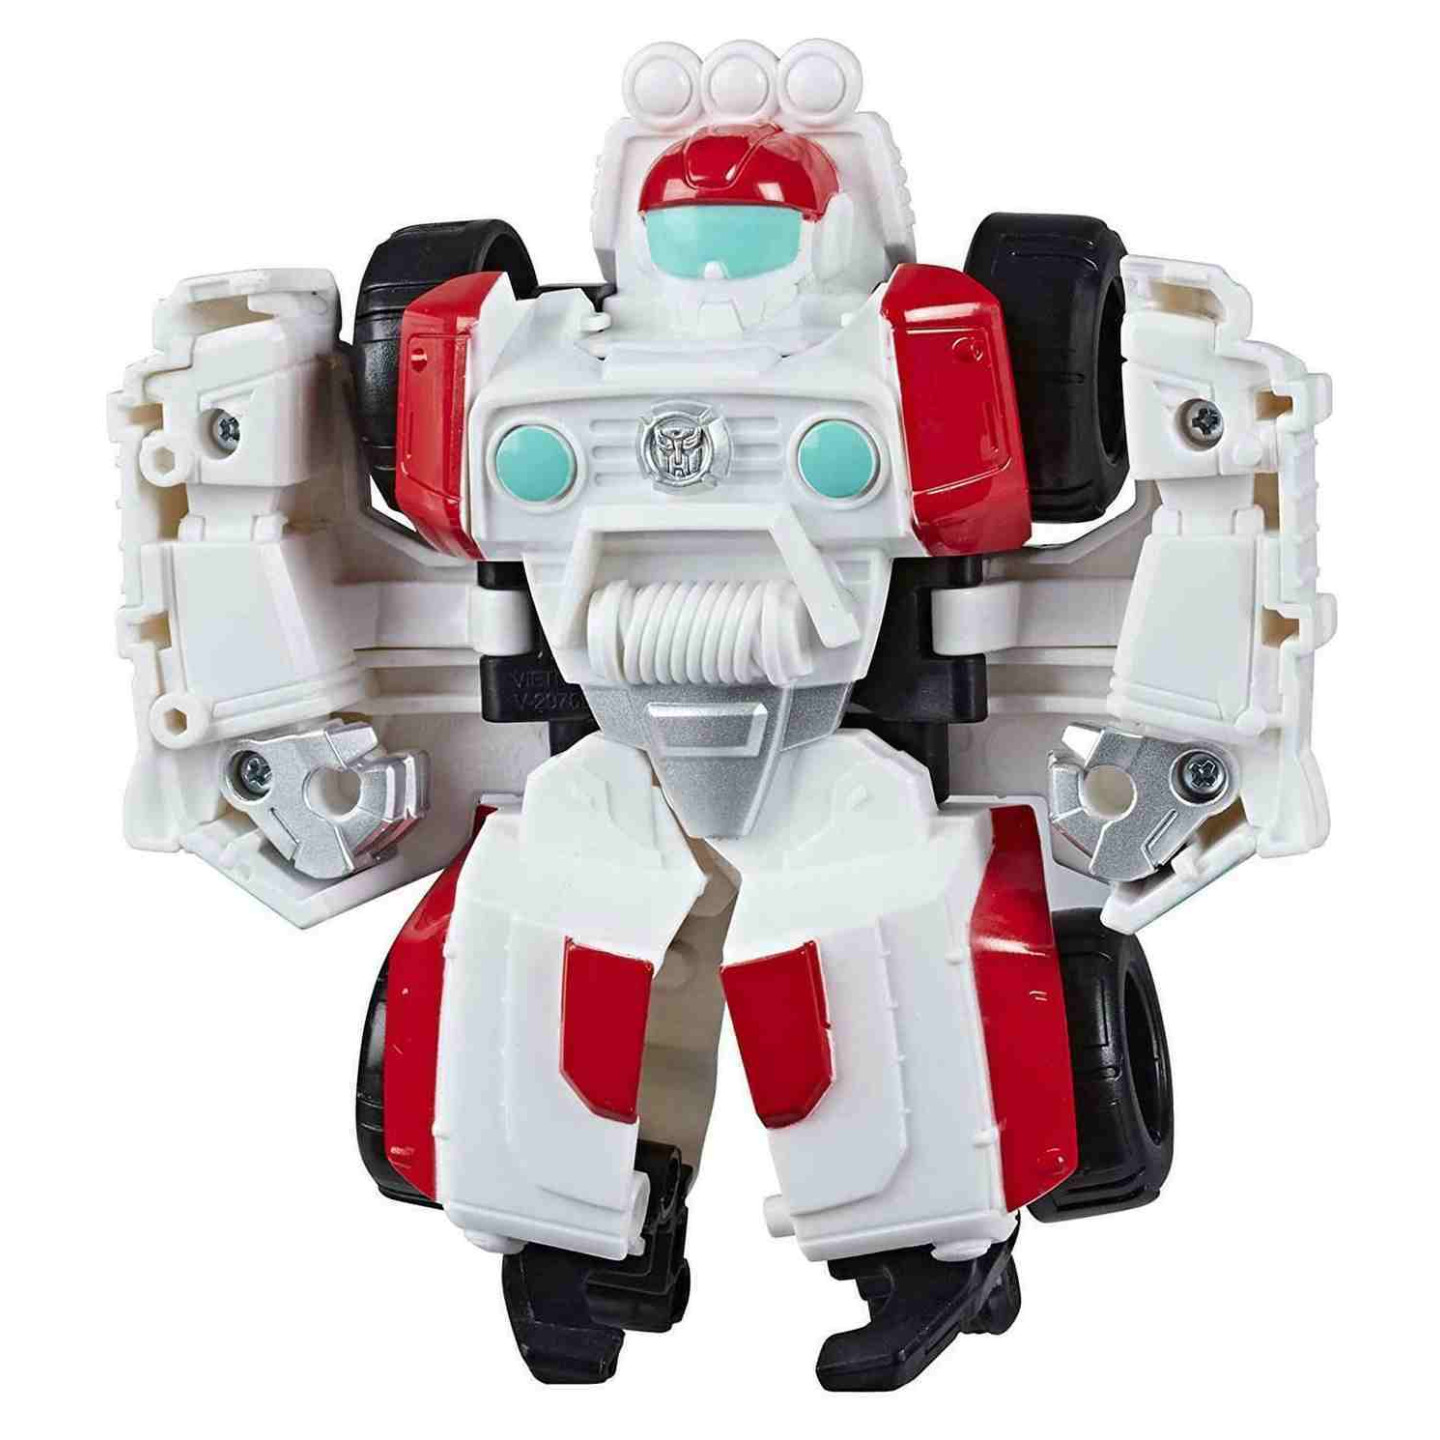 Transformers Rescue Bots Academy MEDIX, Hasbro E8102